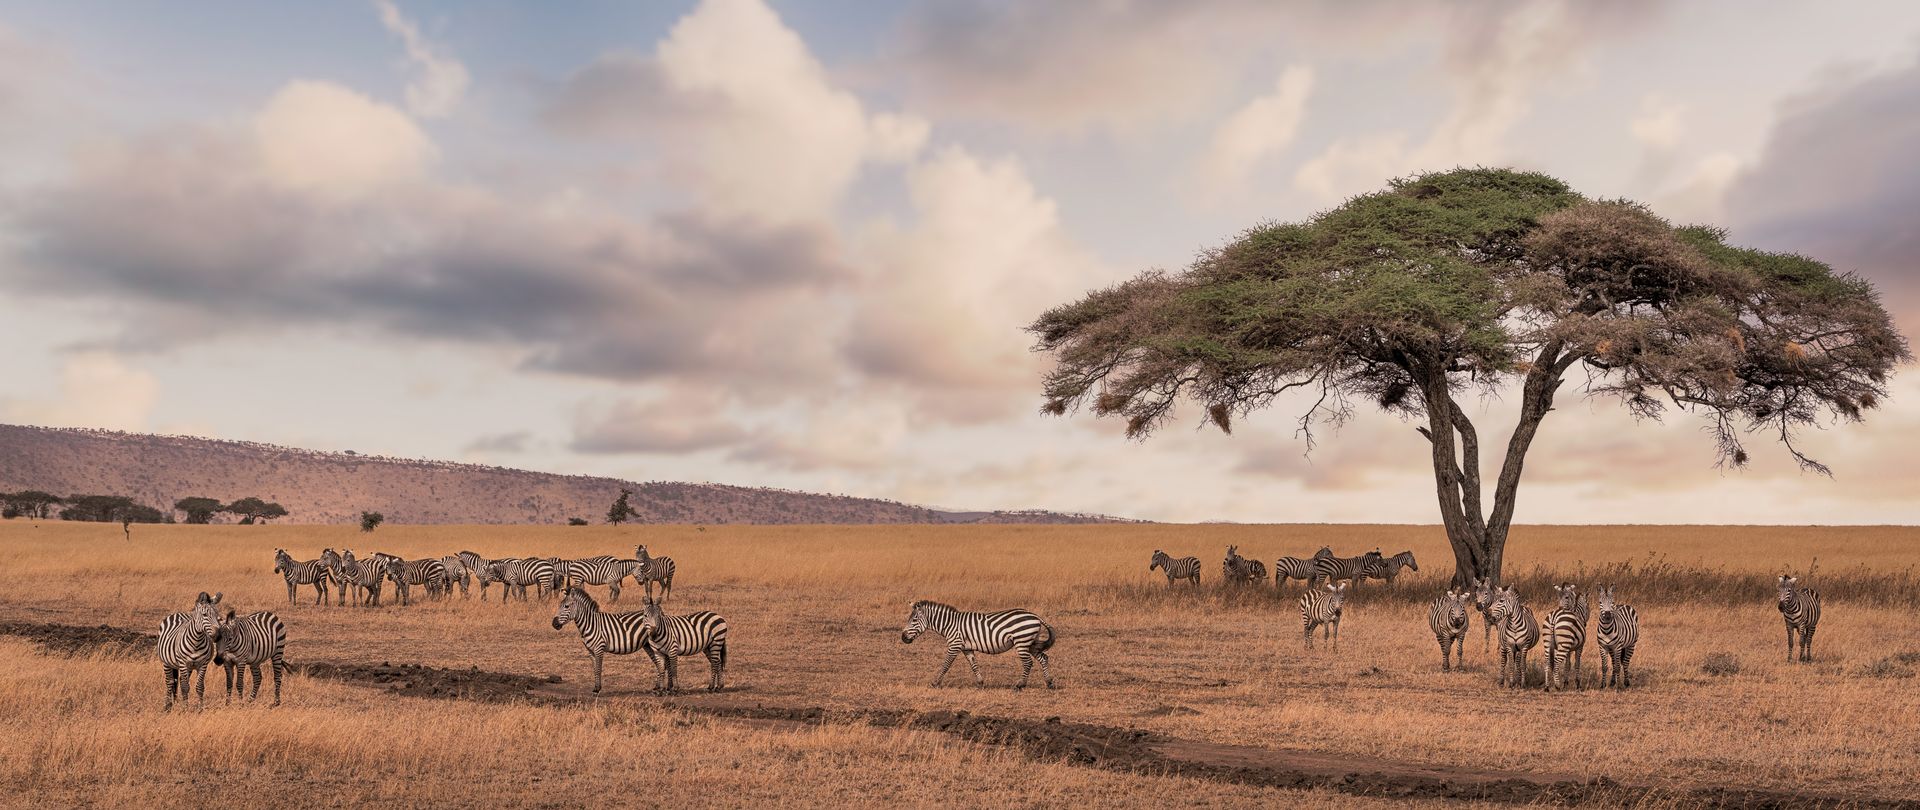 Tour complet de la Tanzanie en Safari